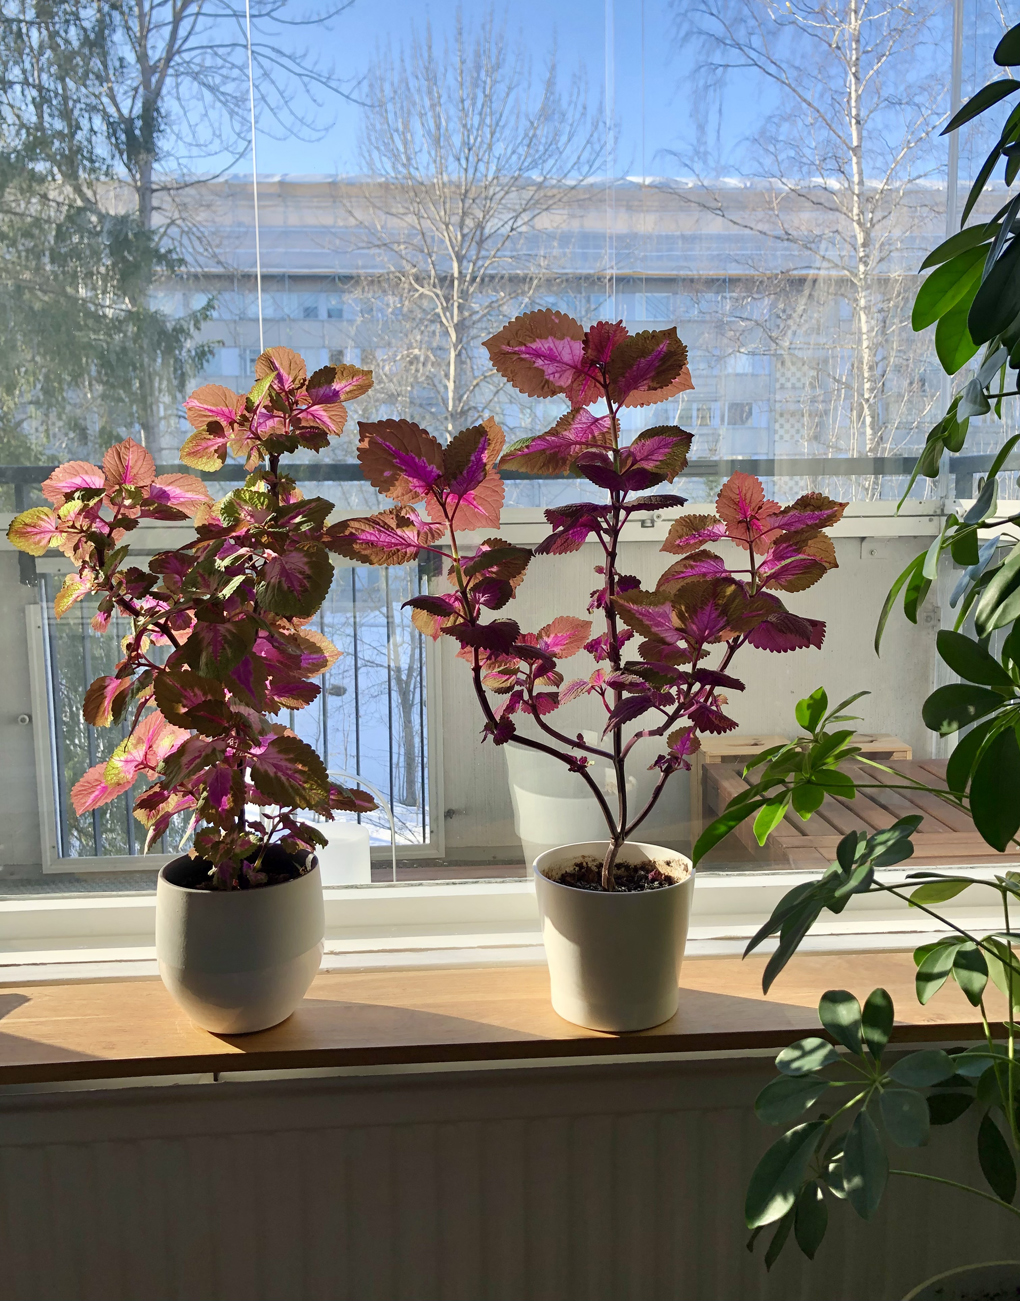 House plants on a window sill